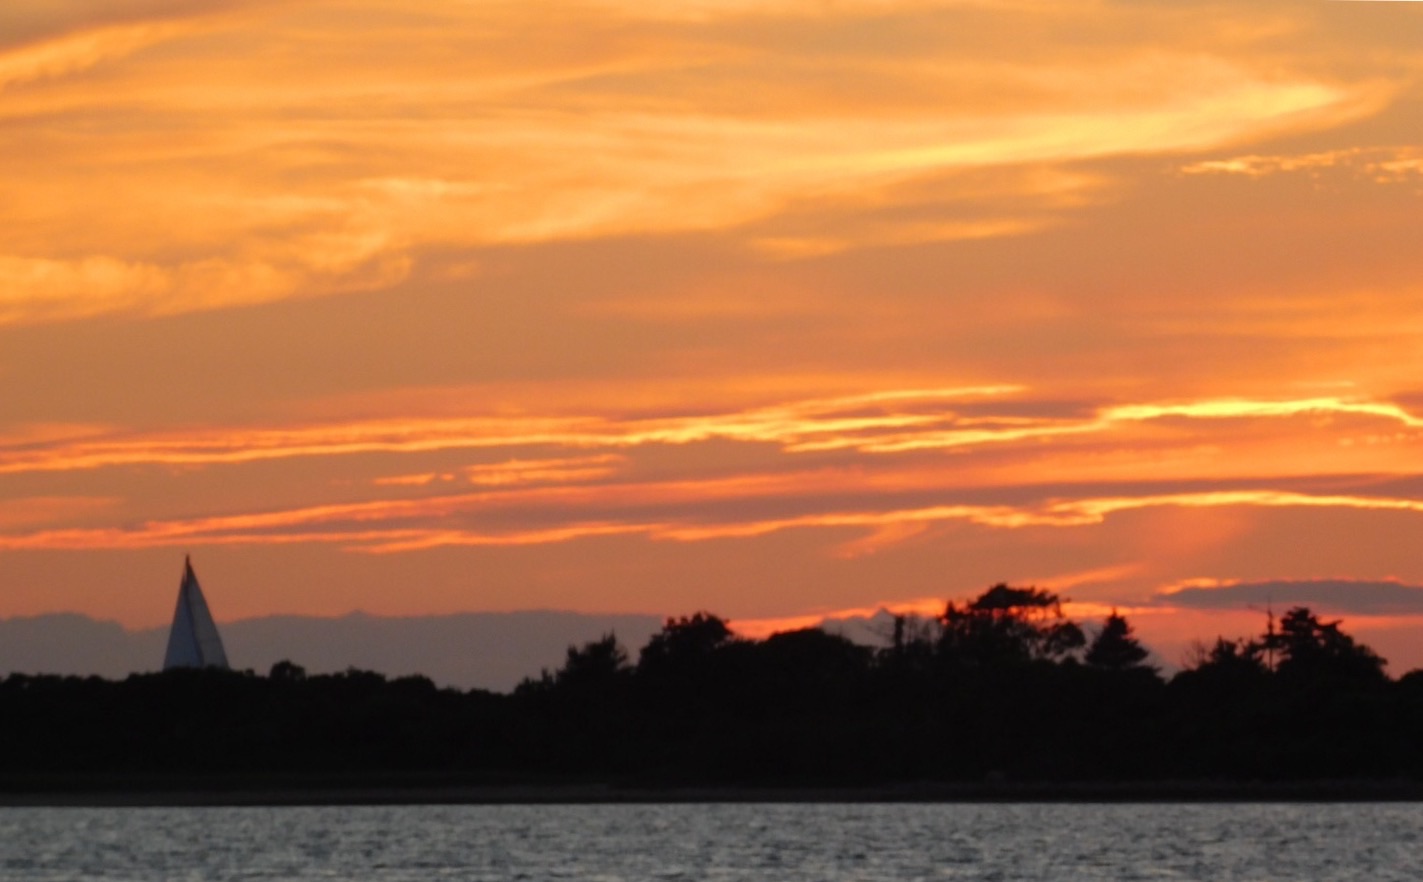 7/22/15 sunset at Block Island